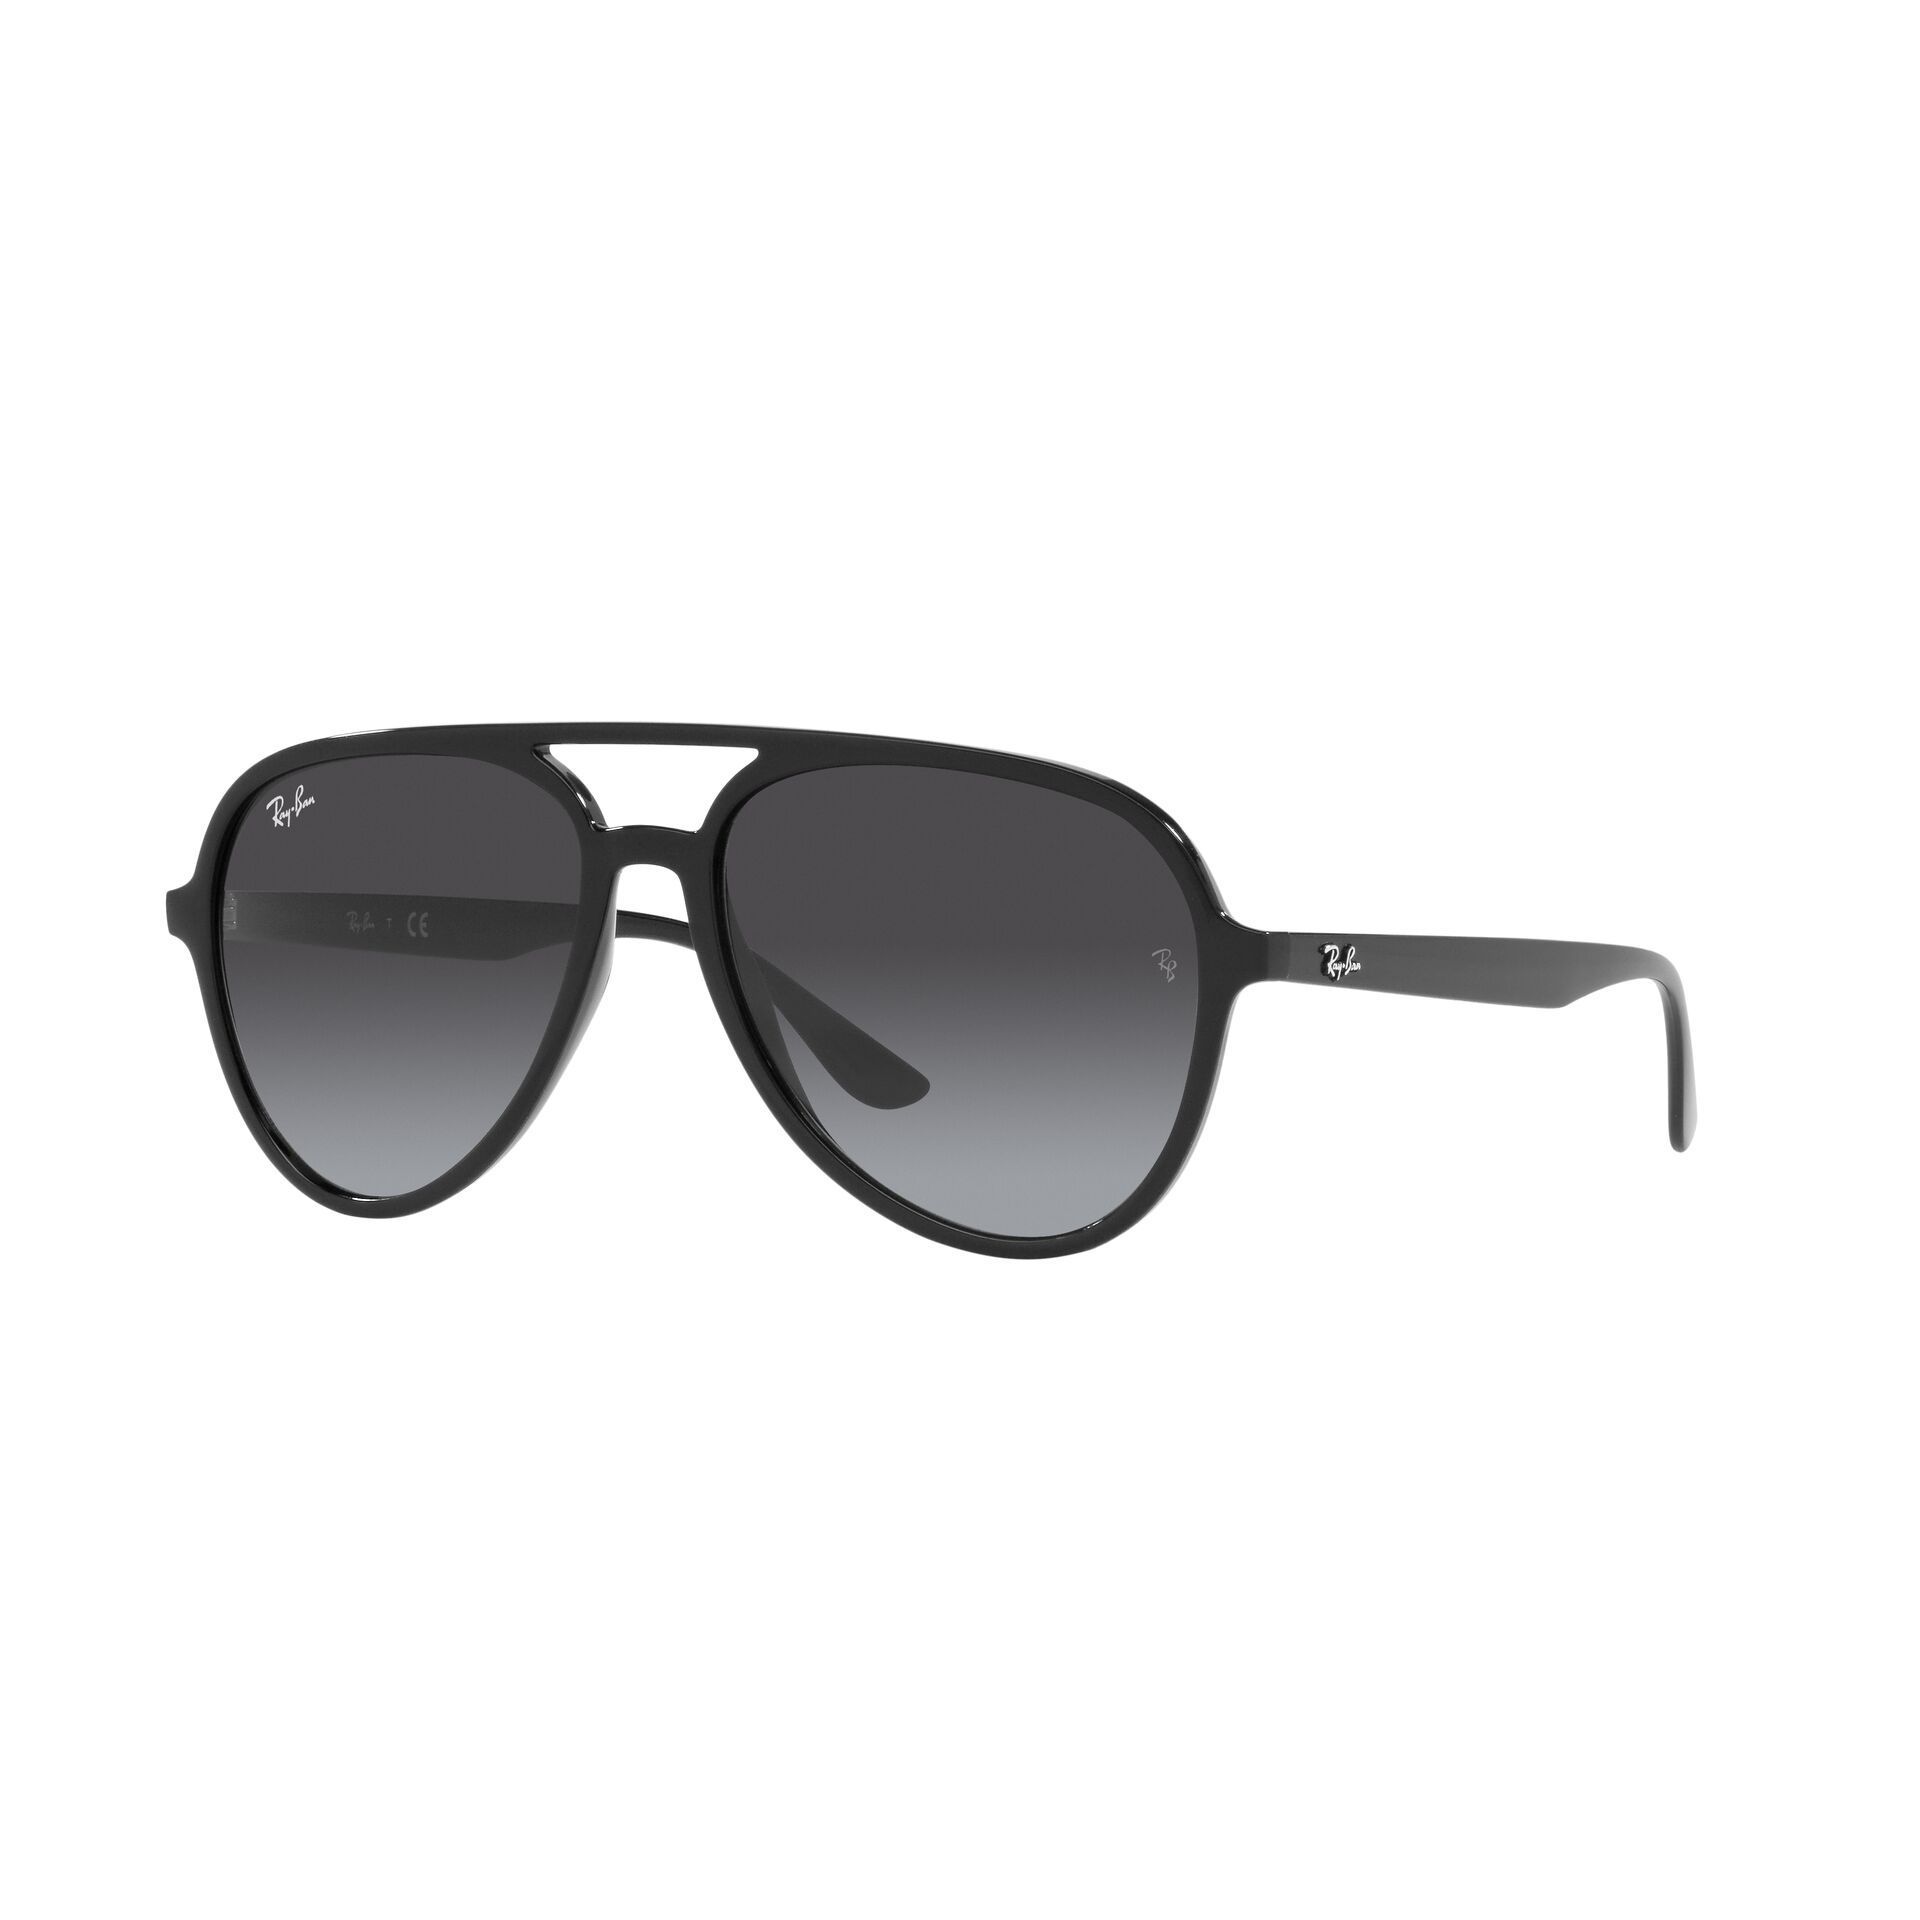 RB4376 601 8G  Sunglasses   - size 57